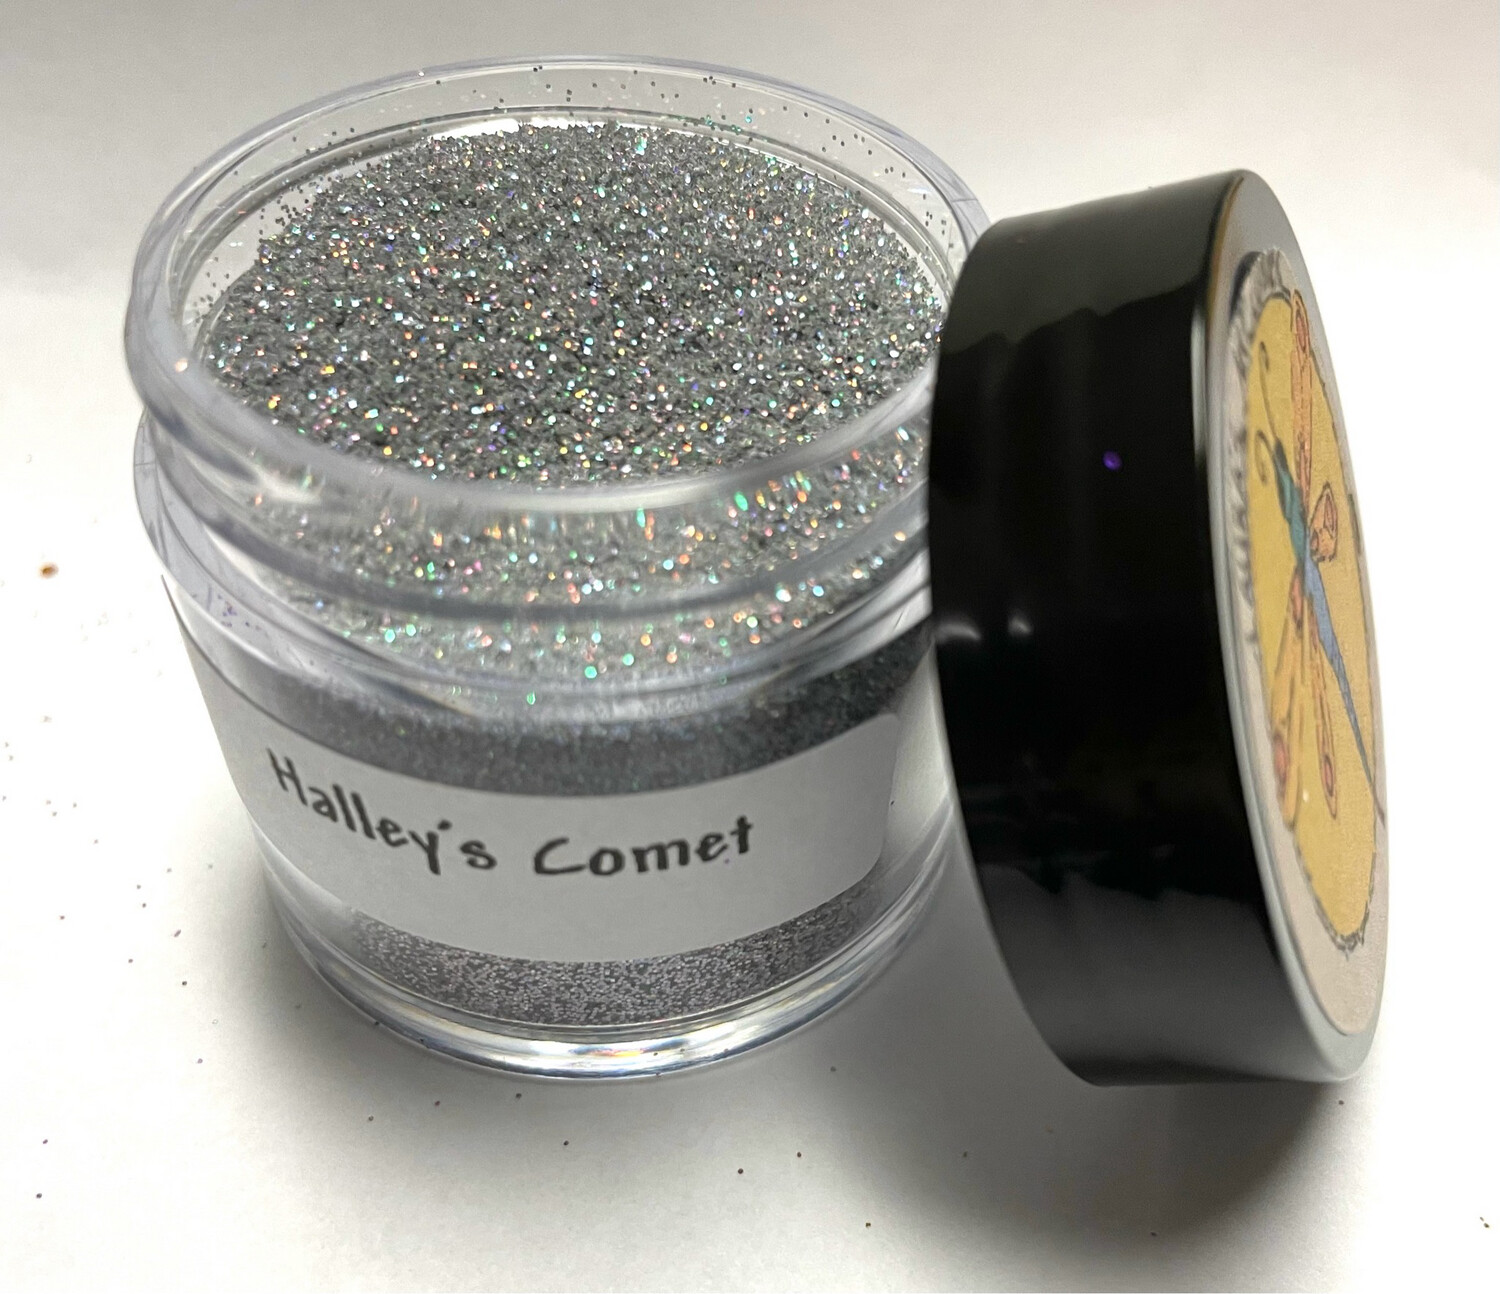 Halley’s Comet Holo Glitter